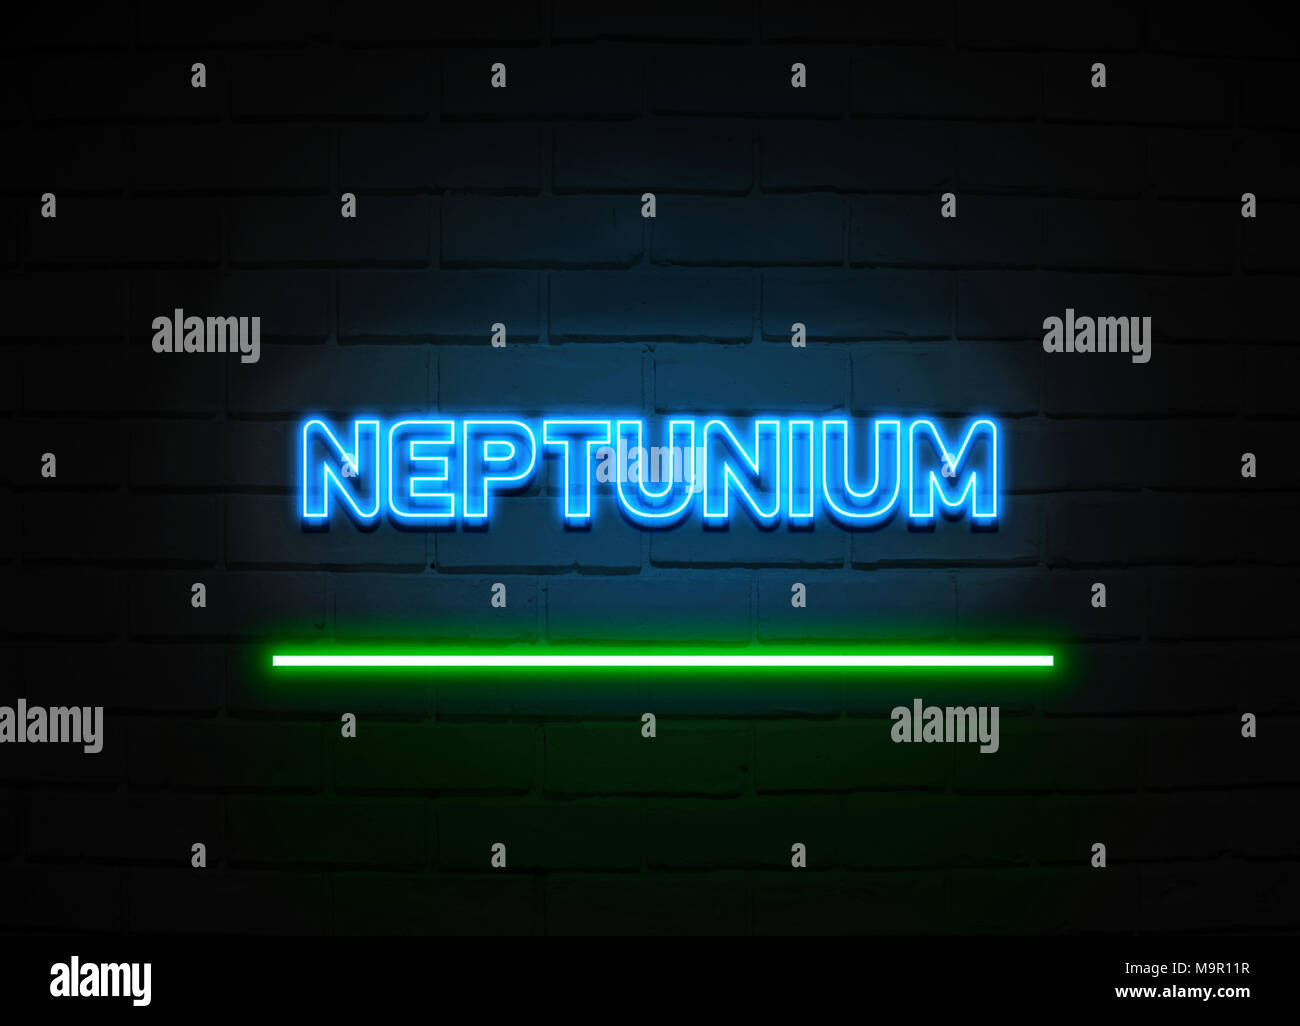 Neptunium Leuchtreklame - glühende Leuchtreklame auf brickwall Wand - 3D-Royalty Free Stock Illustration dargestellt. Stockfoto